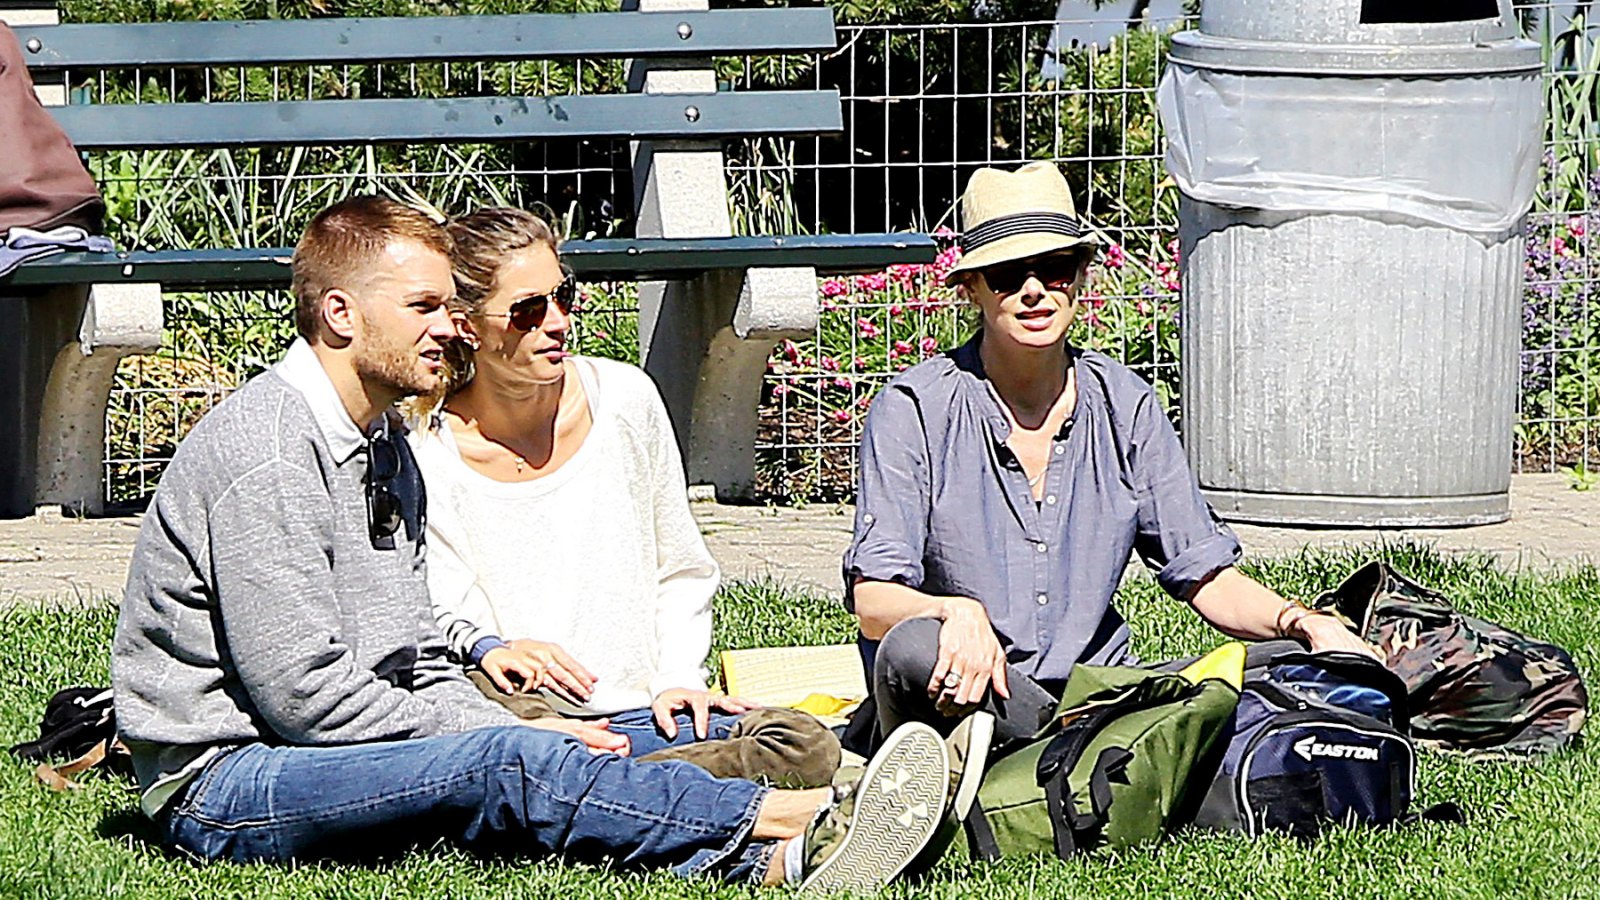 Tom Brady, Gisele Bundchen and Bridget Moynahan on May 18, 2014